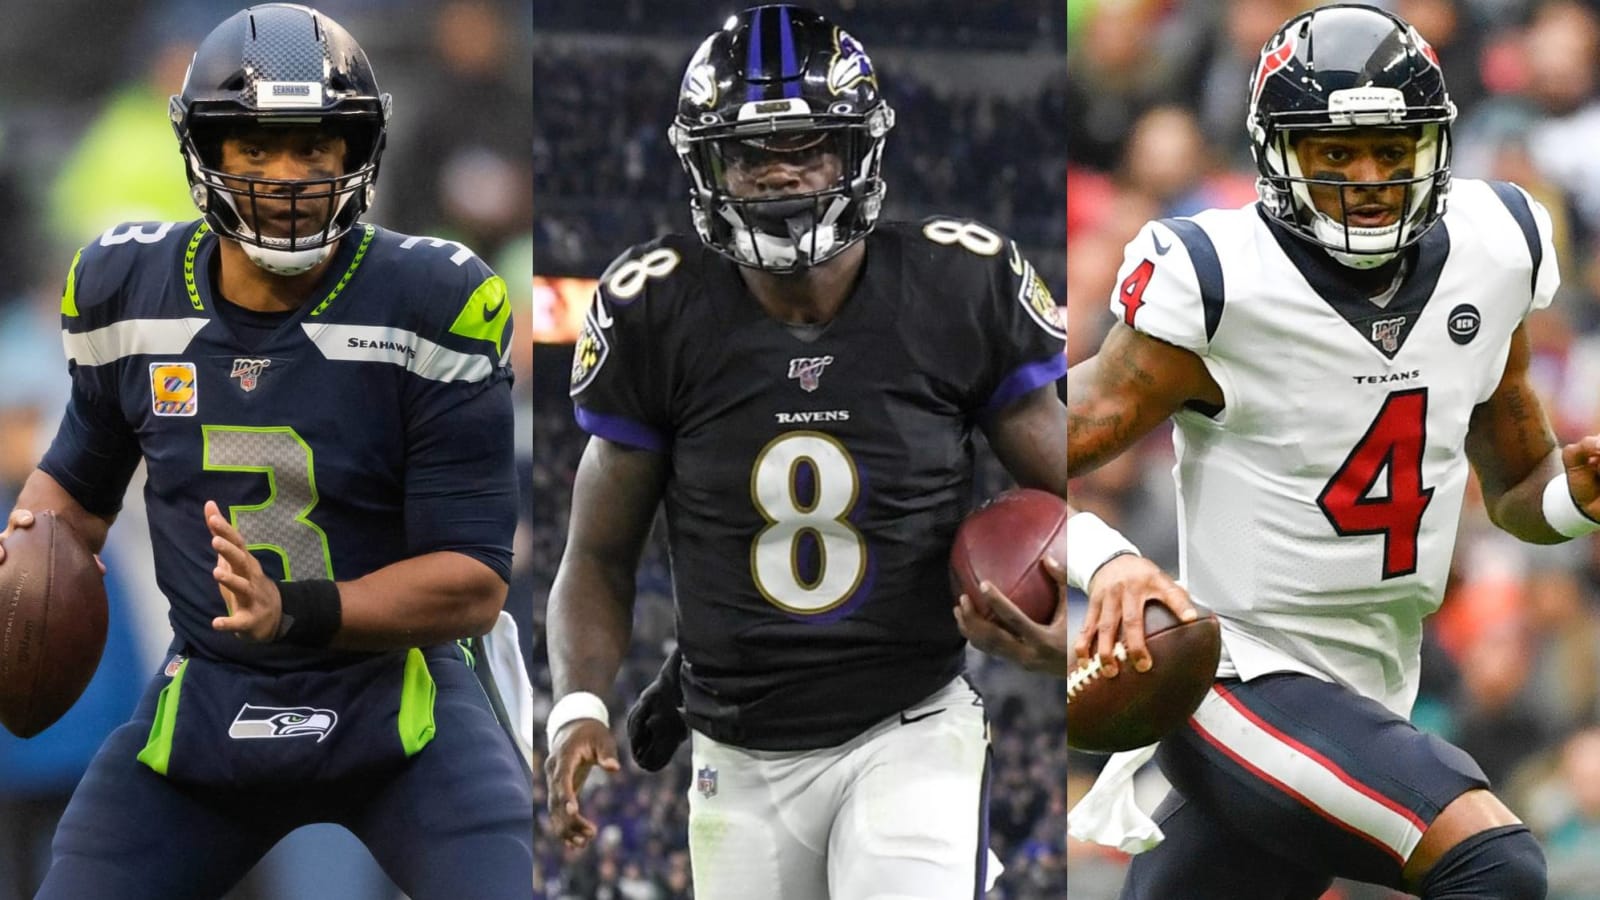 Seahawks' Wilson, Ravens' Jackson, Texans' Watson lead midseason NFL MVP picture